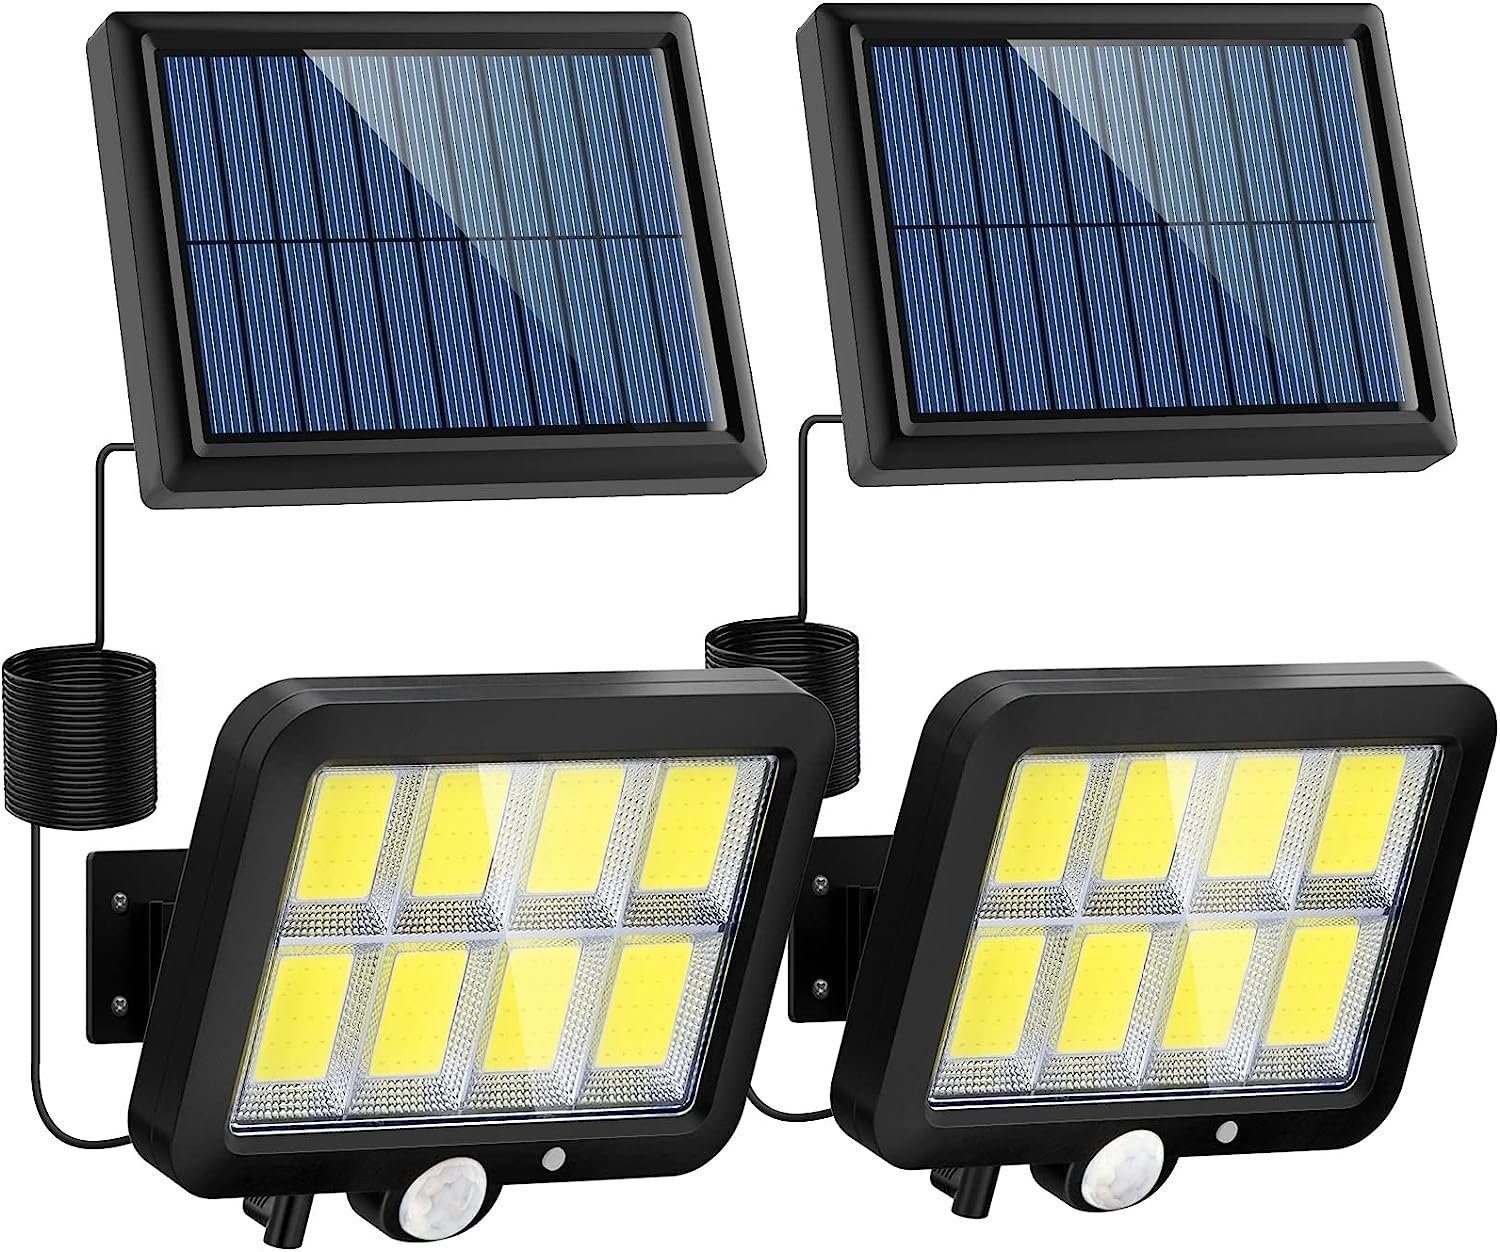 DOPWii LED Solarleuchte 2PCS Solarlampe,3 Modi,mit Bewegungsmelder&5M Kabel,160COB Lampenperle, LED fest integriert